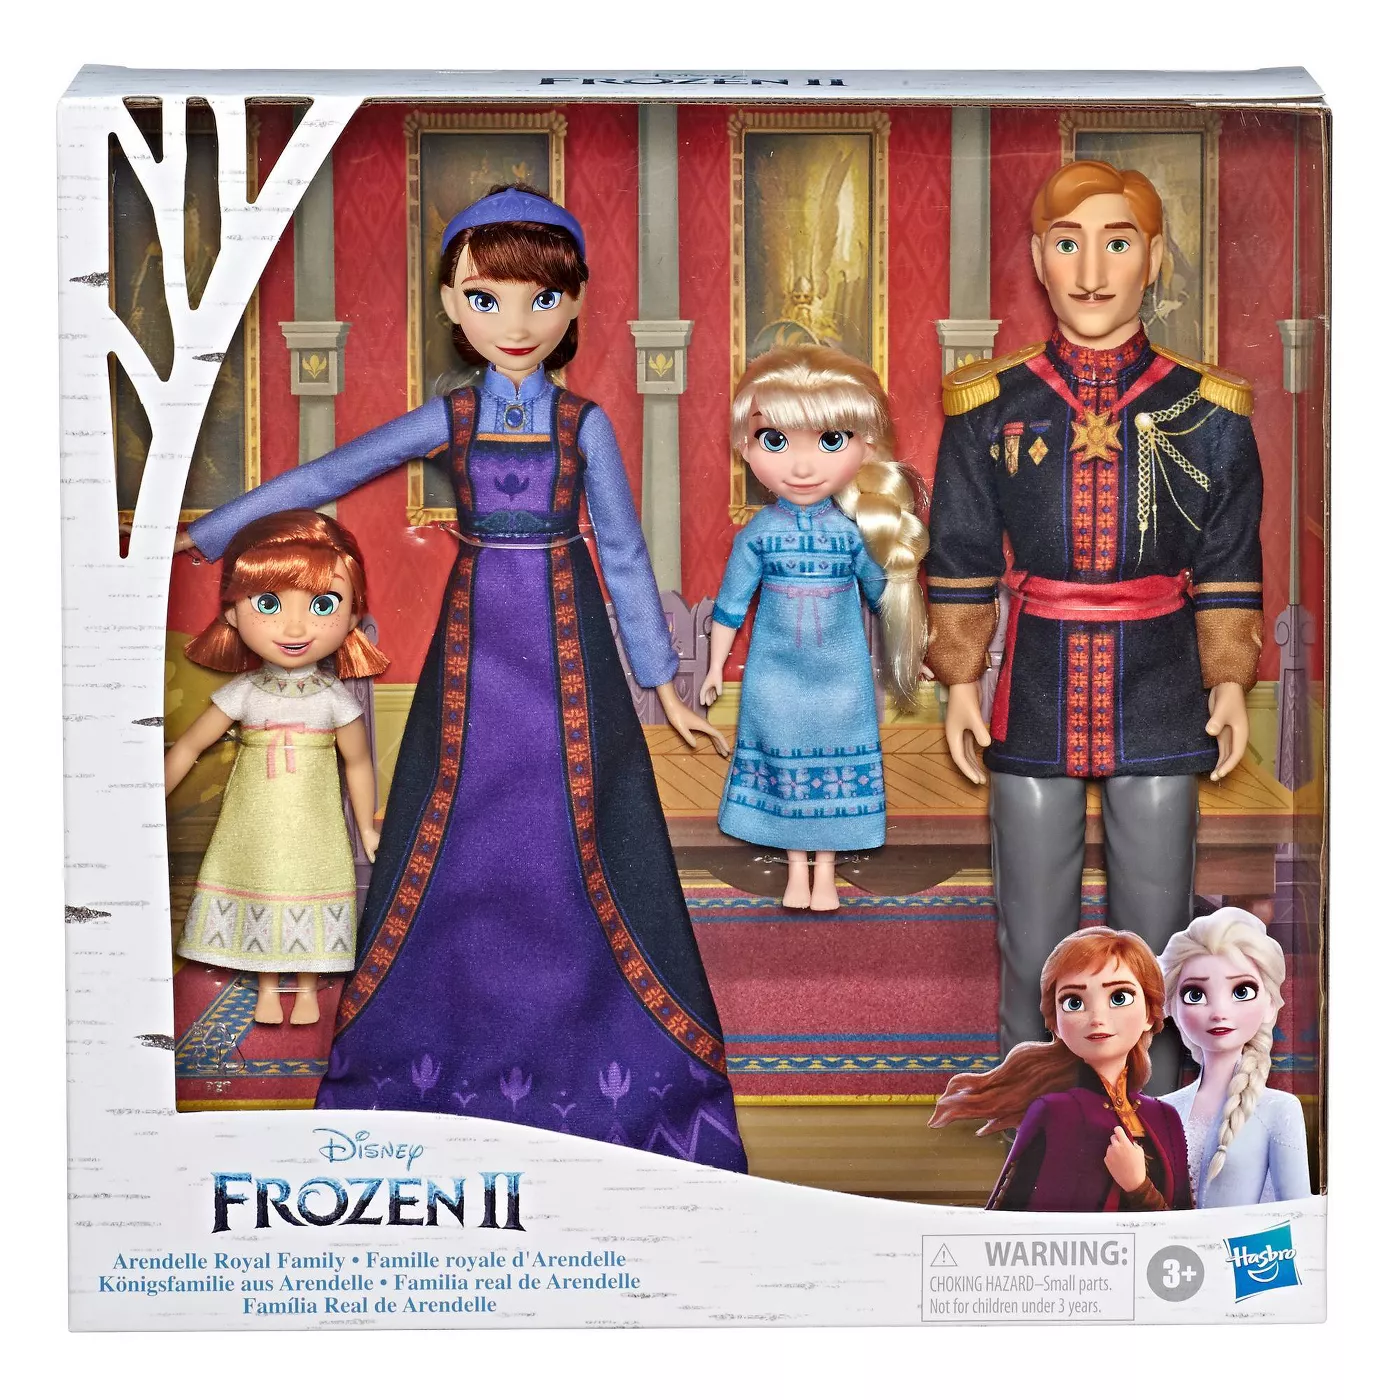 Disney Frozen 2 Arendelle Royal Family Fashion Doll Set (Target Exclusive) - image 2 of 12